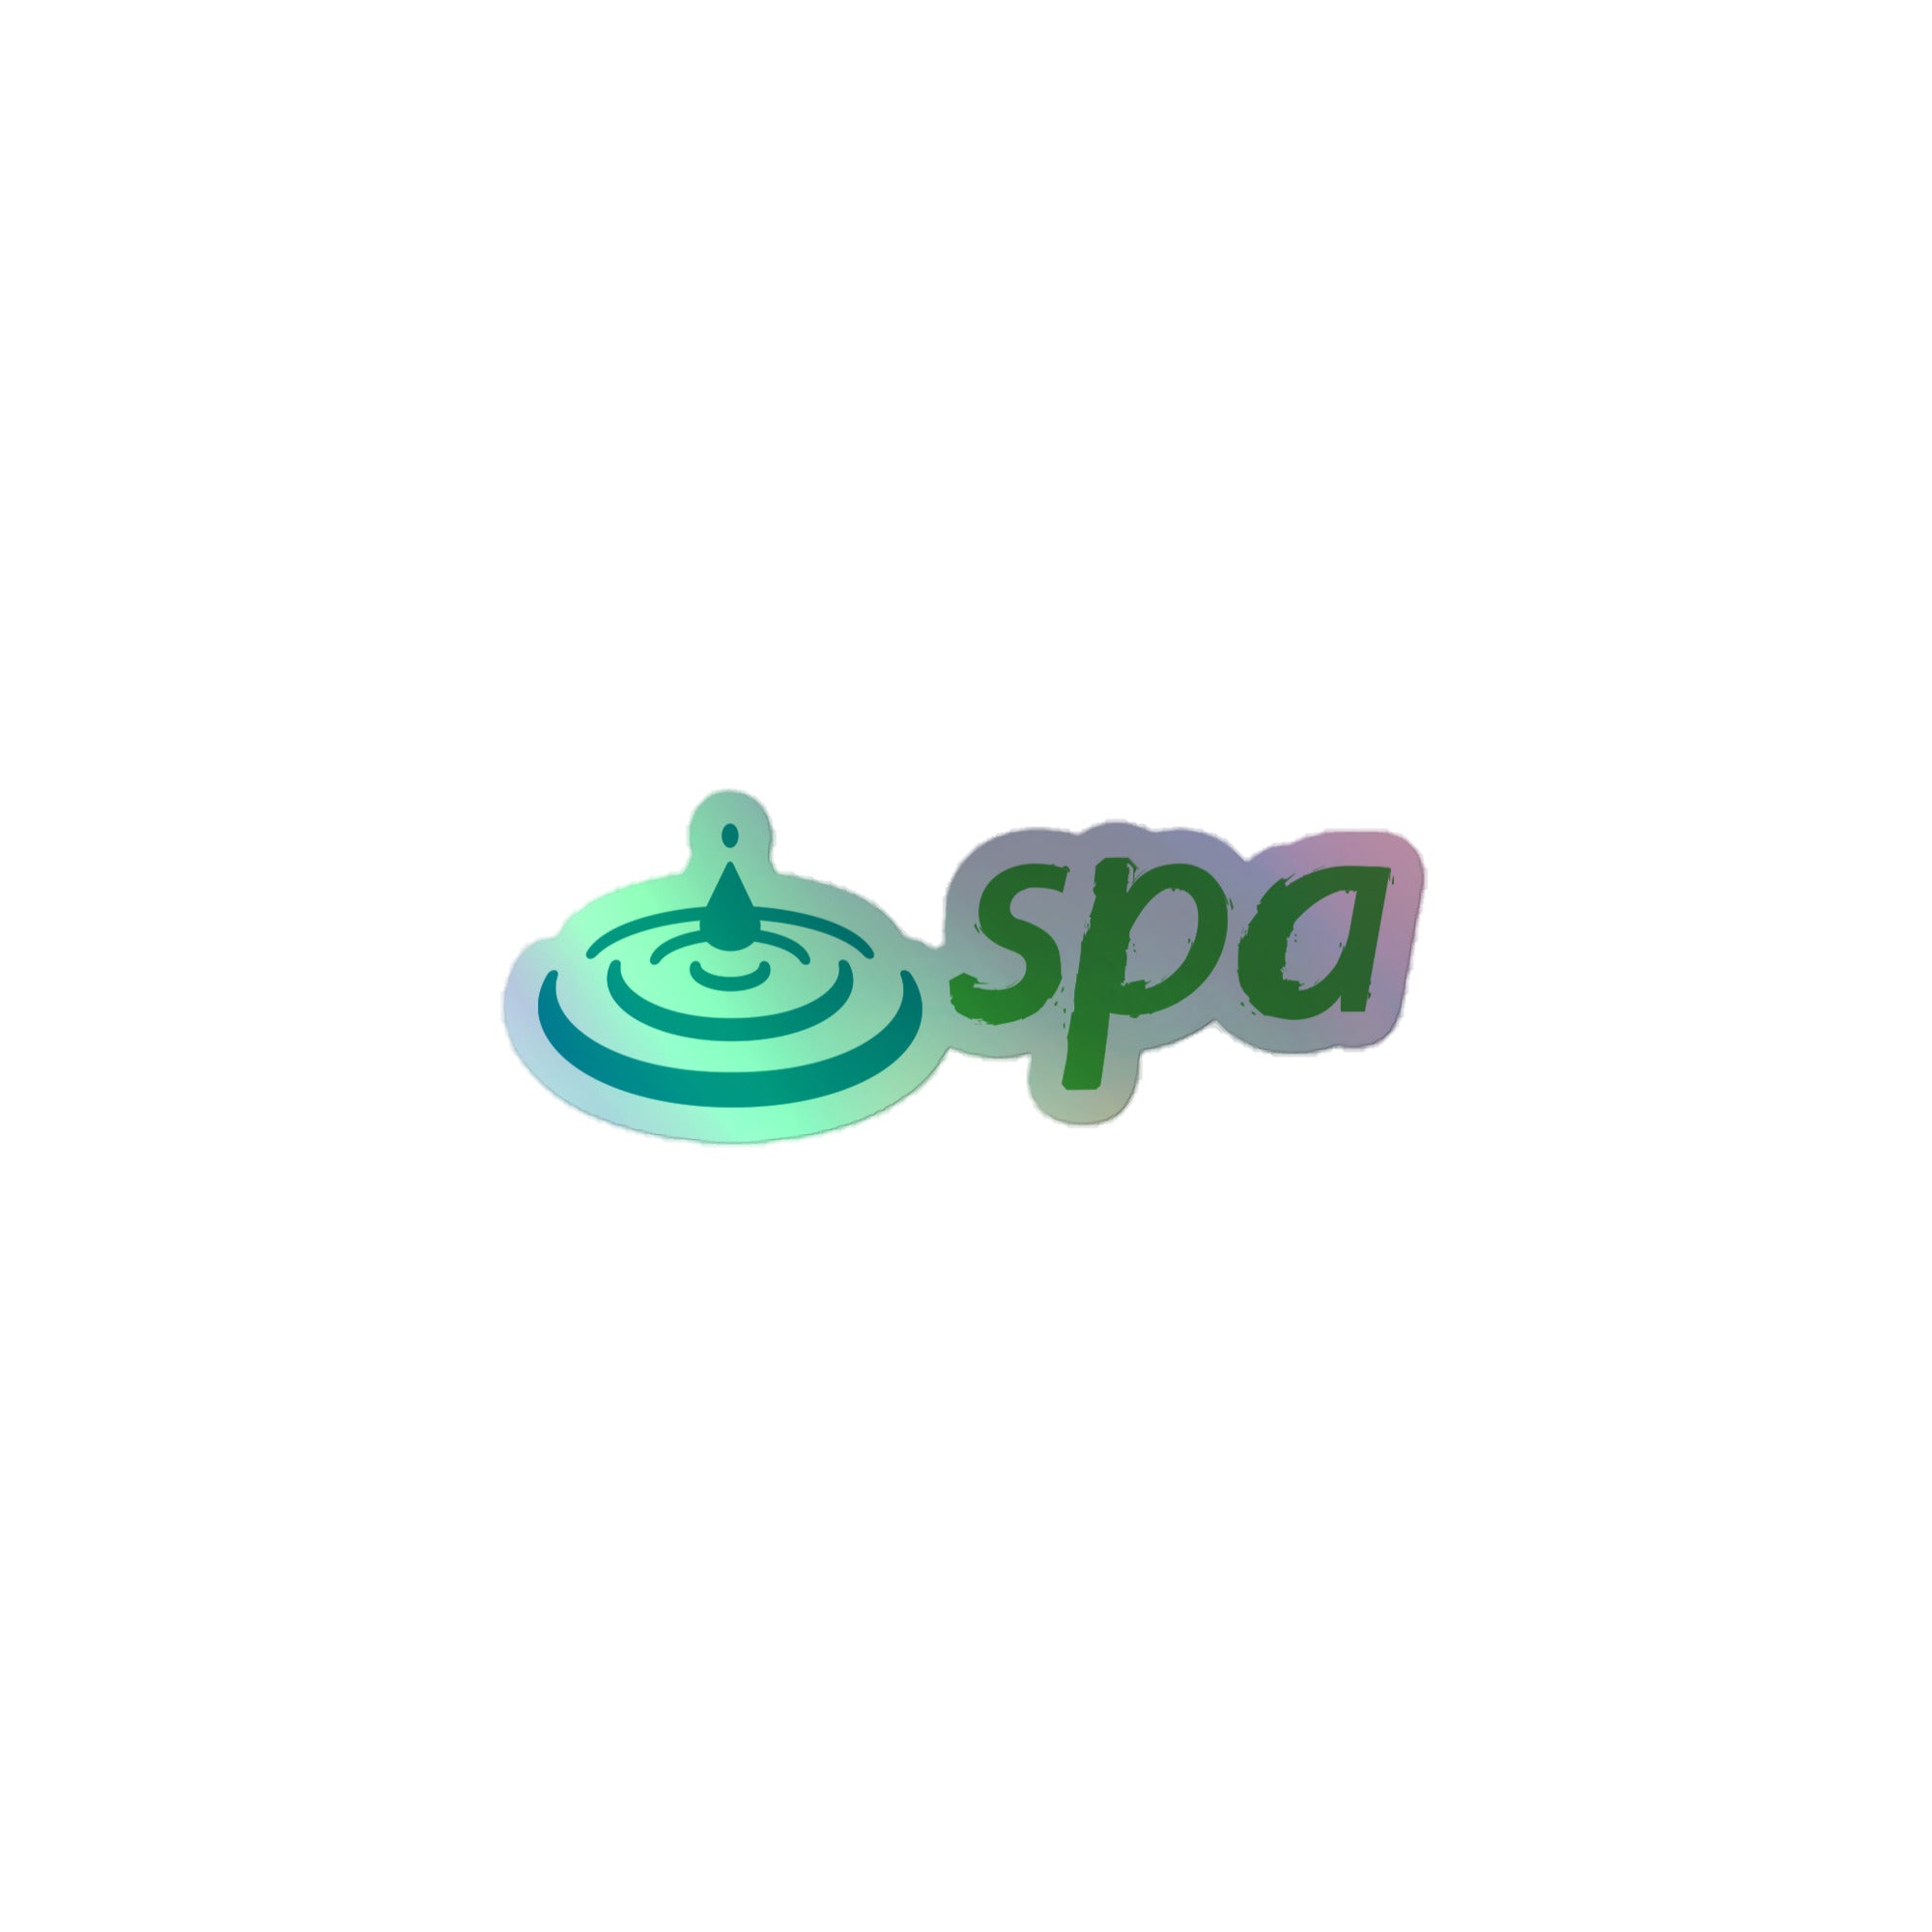 Spa: Holographic Sticker